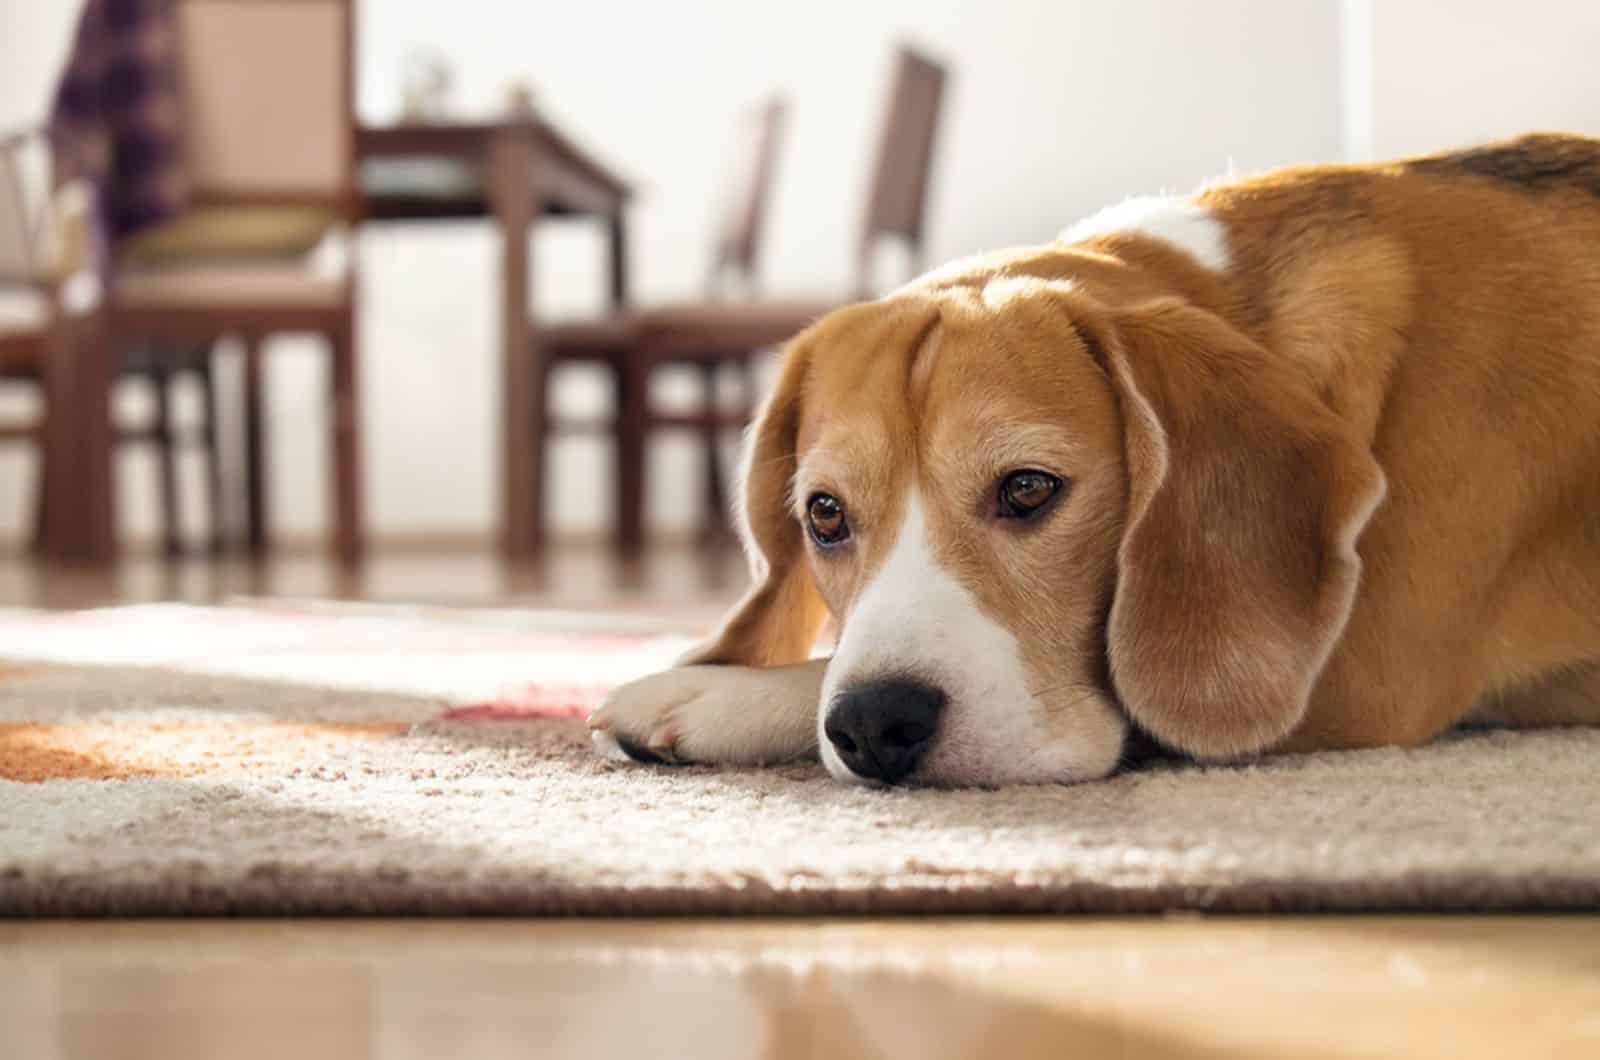 beagle dog lying on the carpet and looking sad